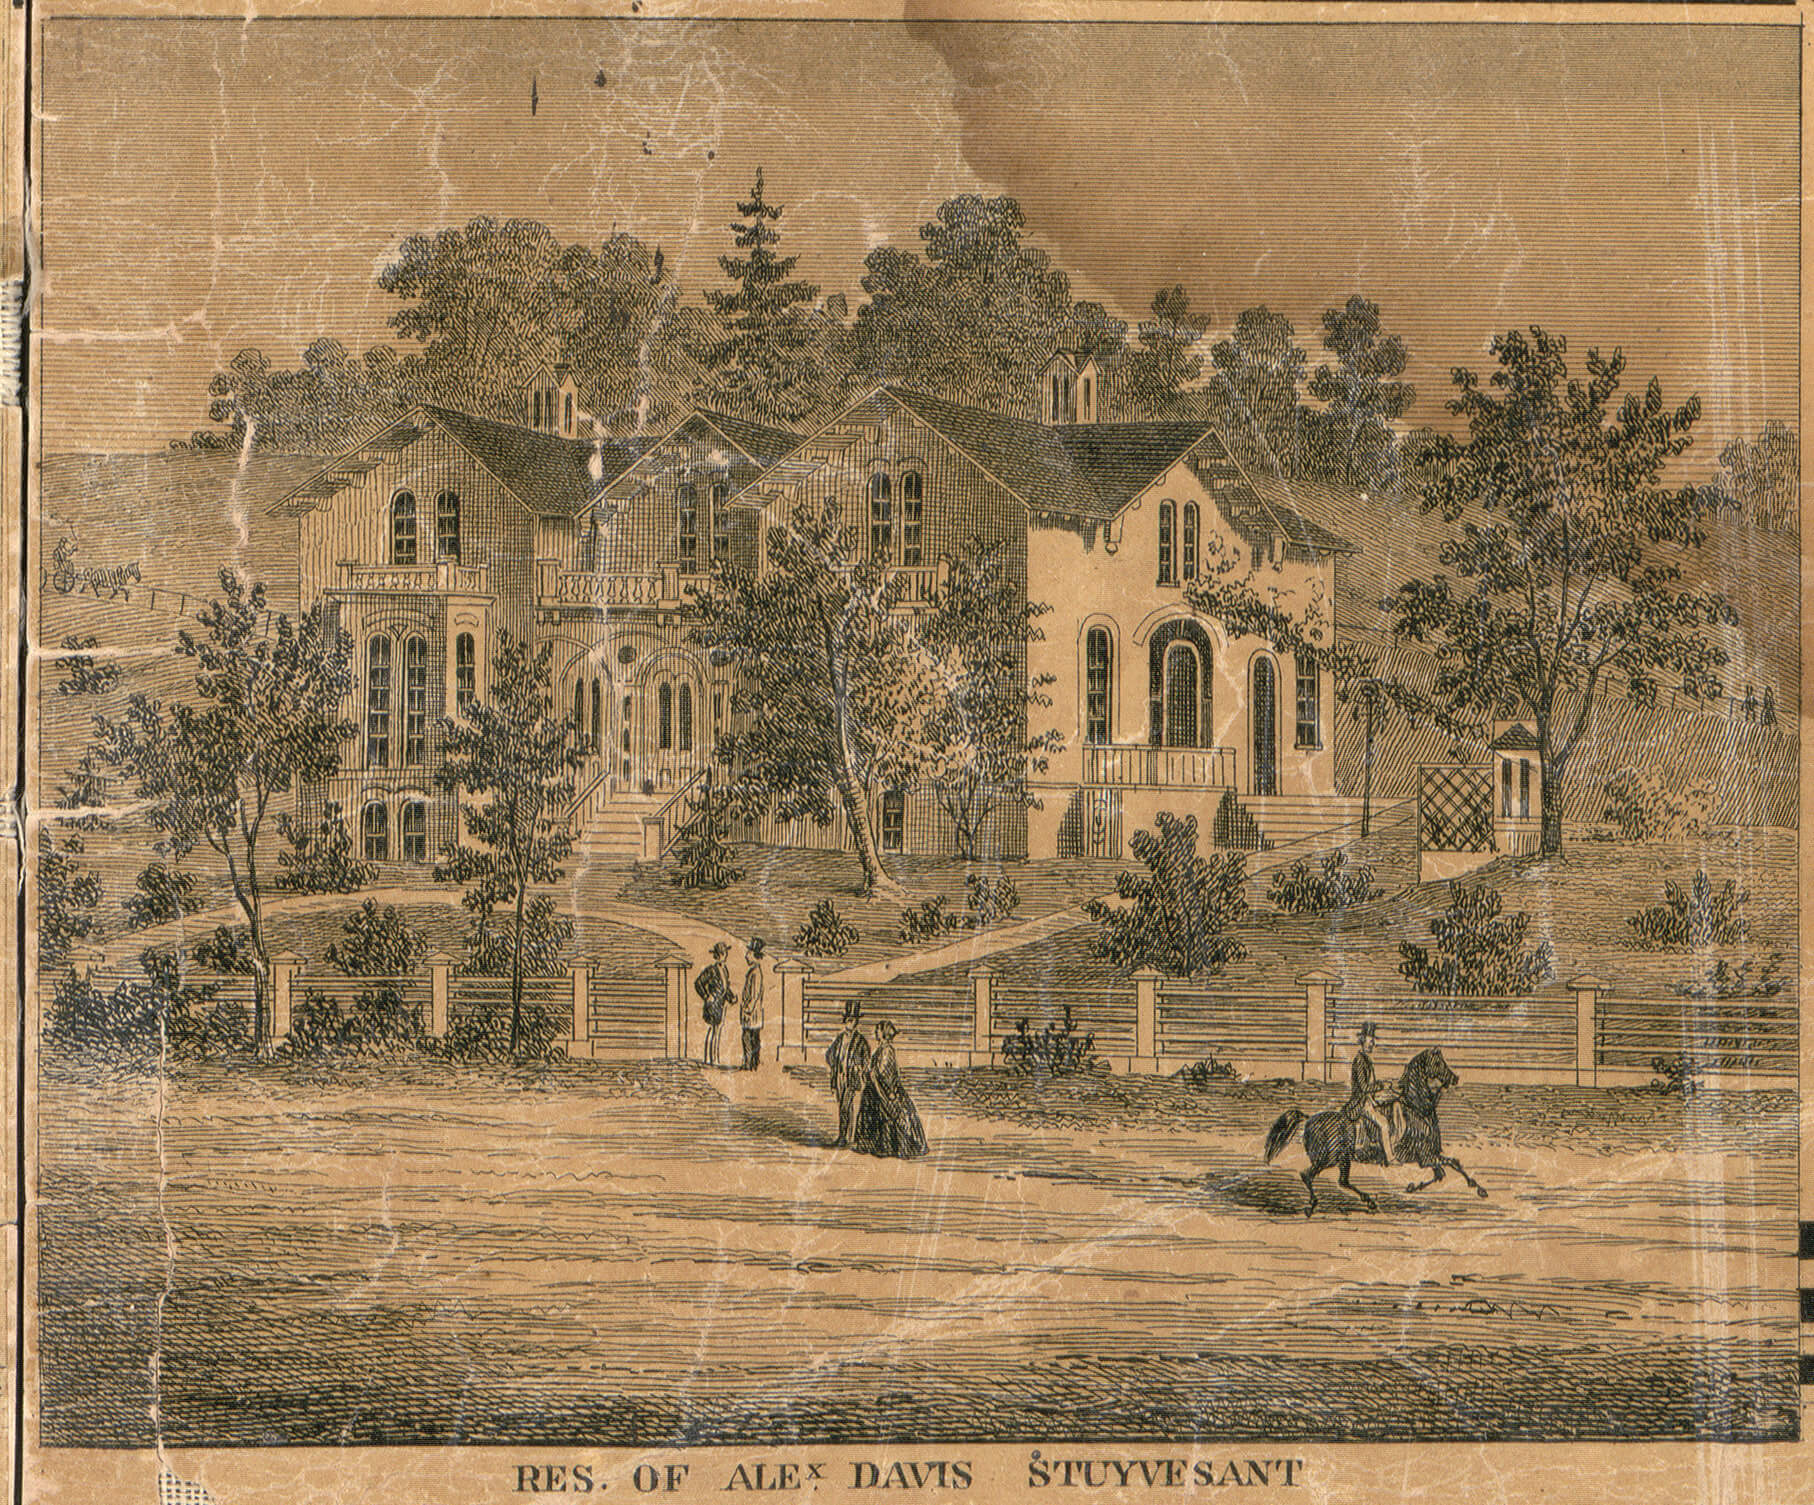 1858 illustration of the house of Alexander Davis